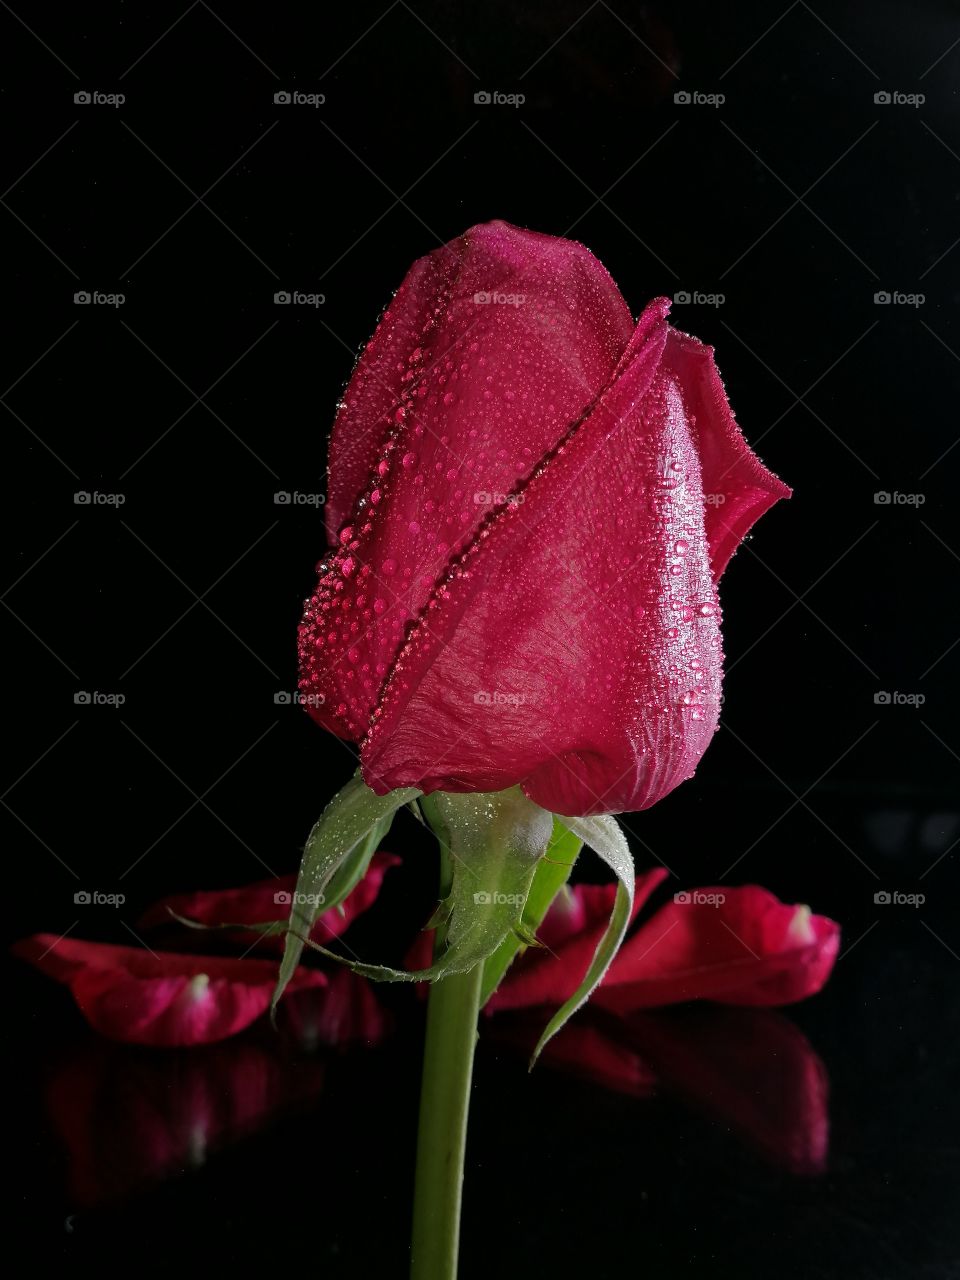 Red​ rose​